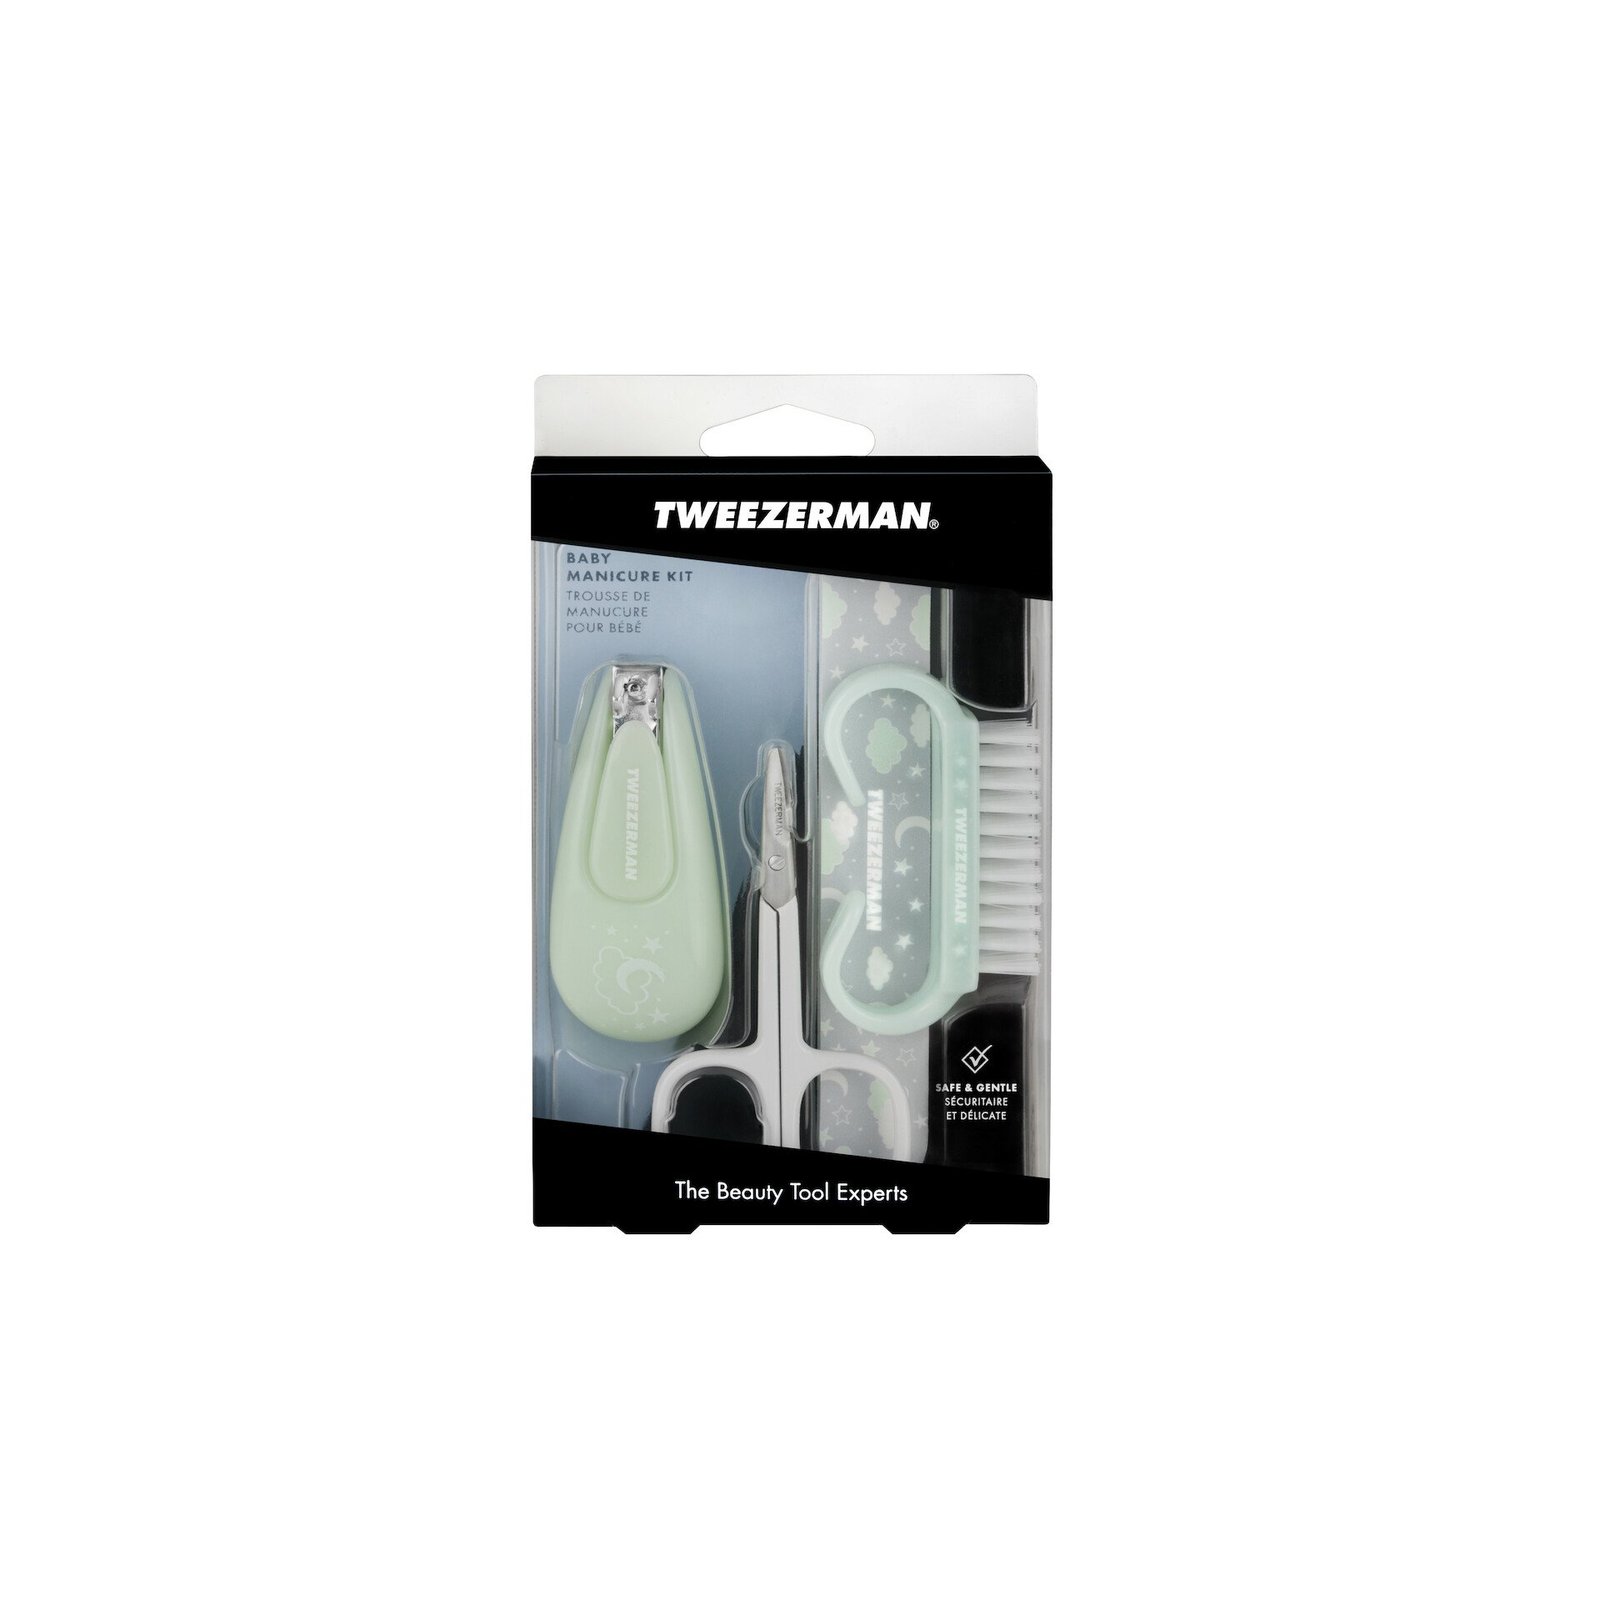 Tweezerman Baby Manicure Kit